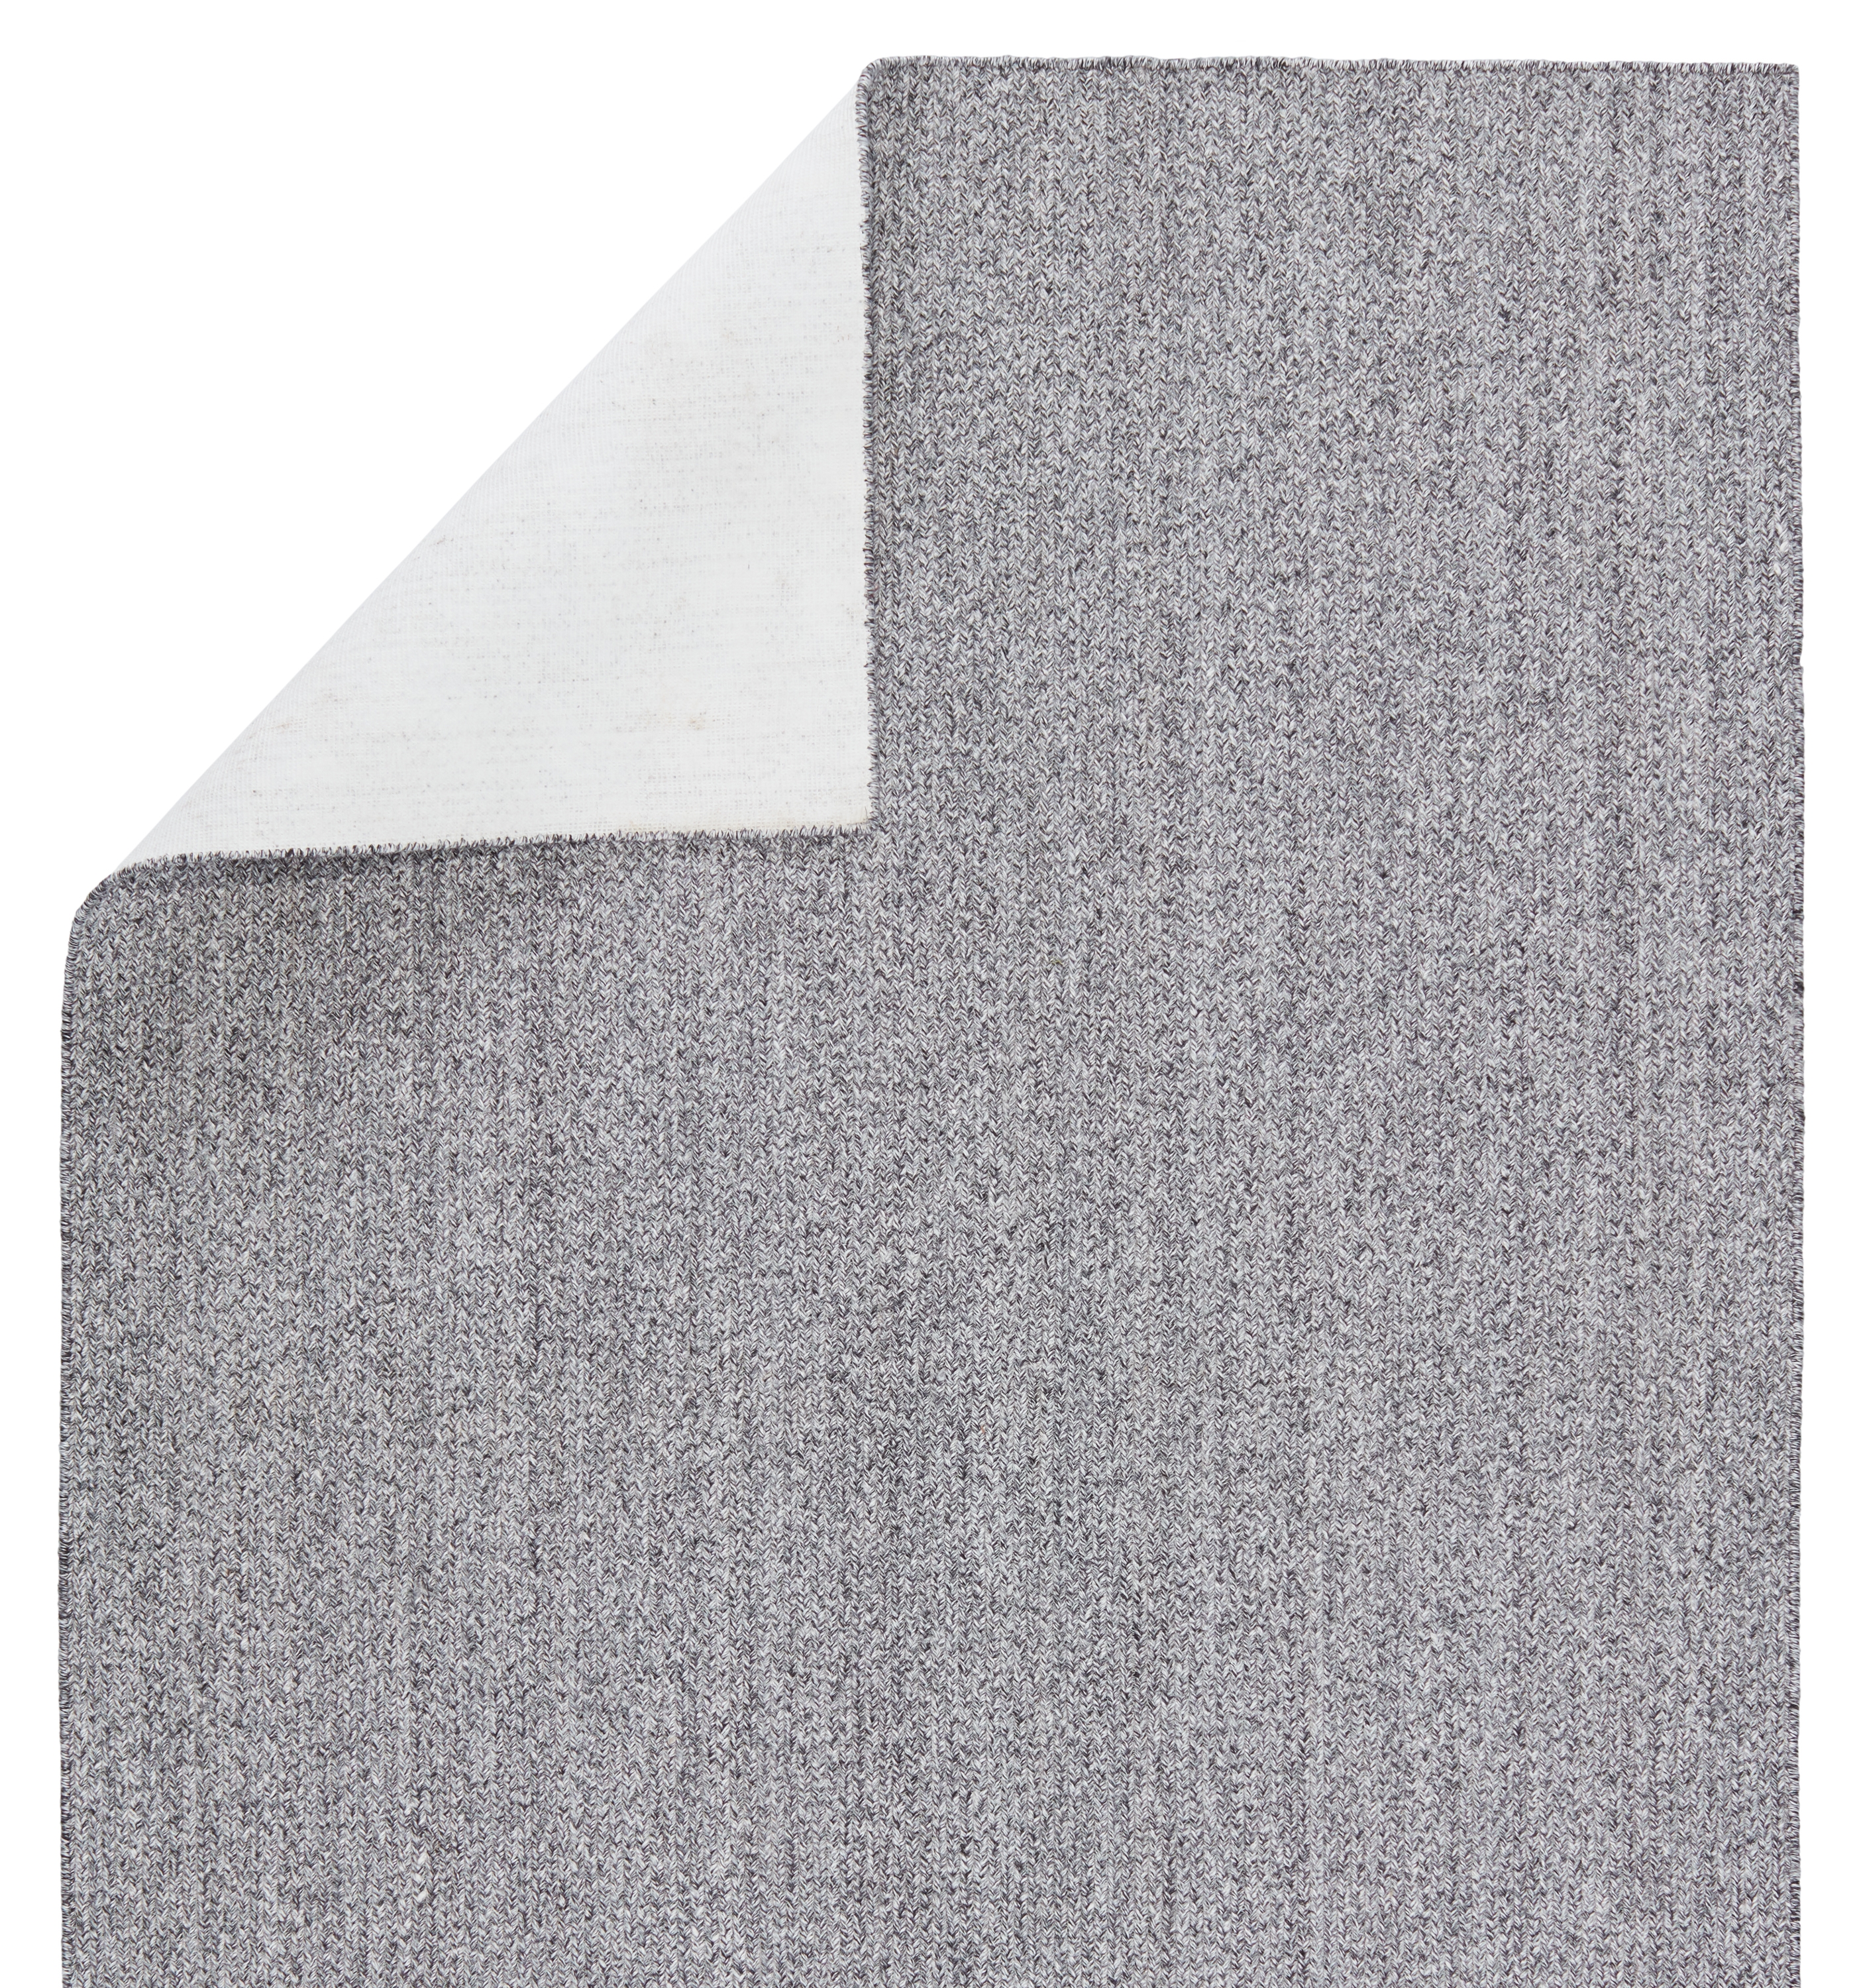 Maracay Indoor/ Outdoor Solid Black/ White Area Rug (5'X8') - Image 2